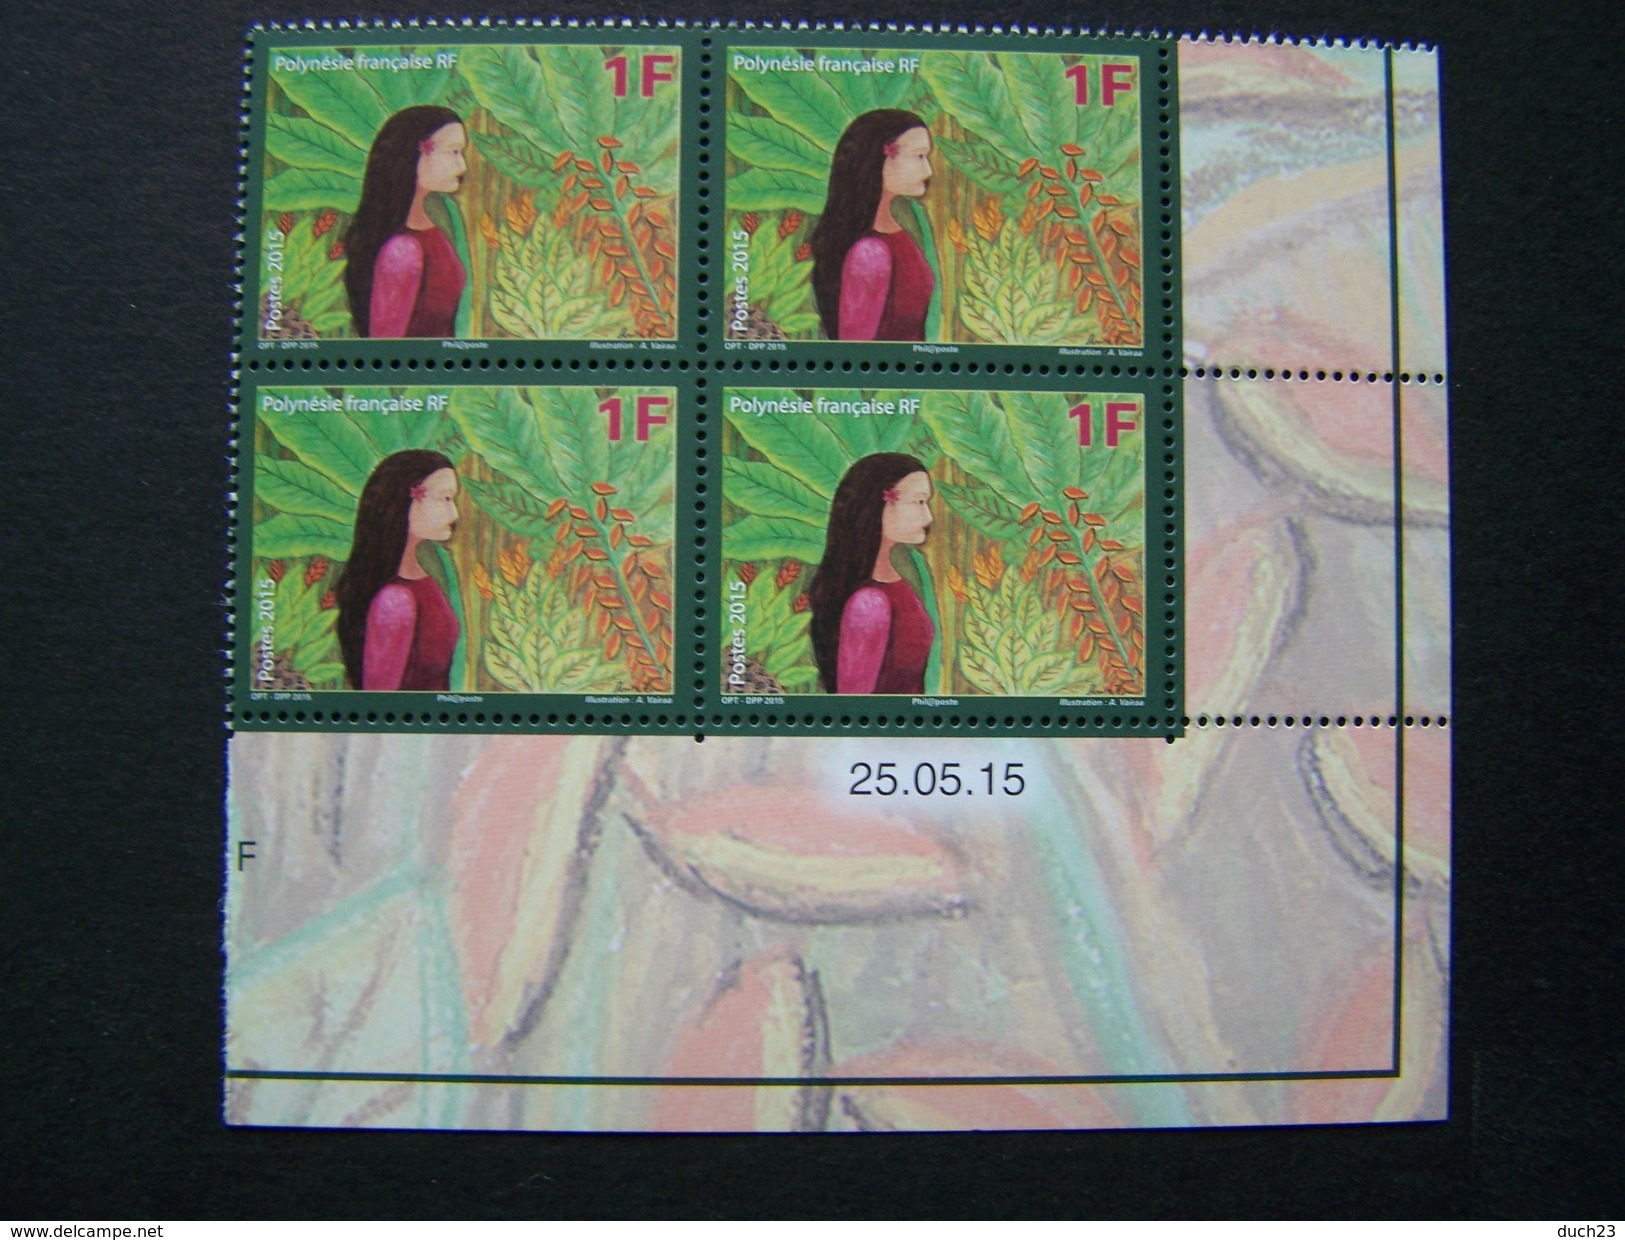 POLYNESIE FRANCAISE ANNEE 2015 NEUF** SANS CHARNIERE N° 1088 ESPOIR POUR L'AVENIR COIN DATE DU 25.05.15 - Unused Stamps